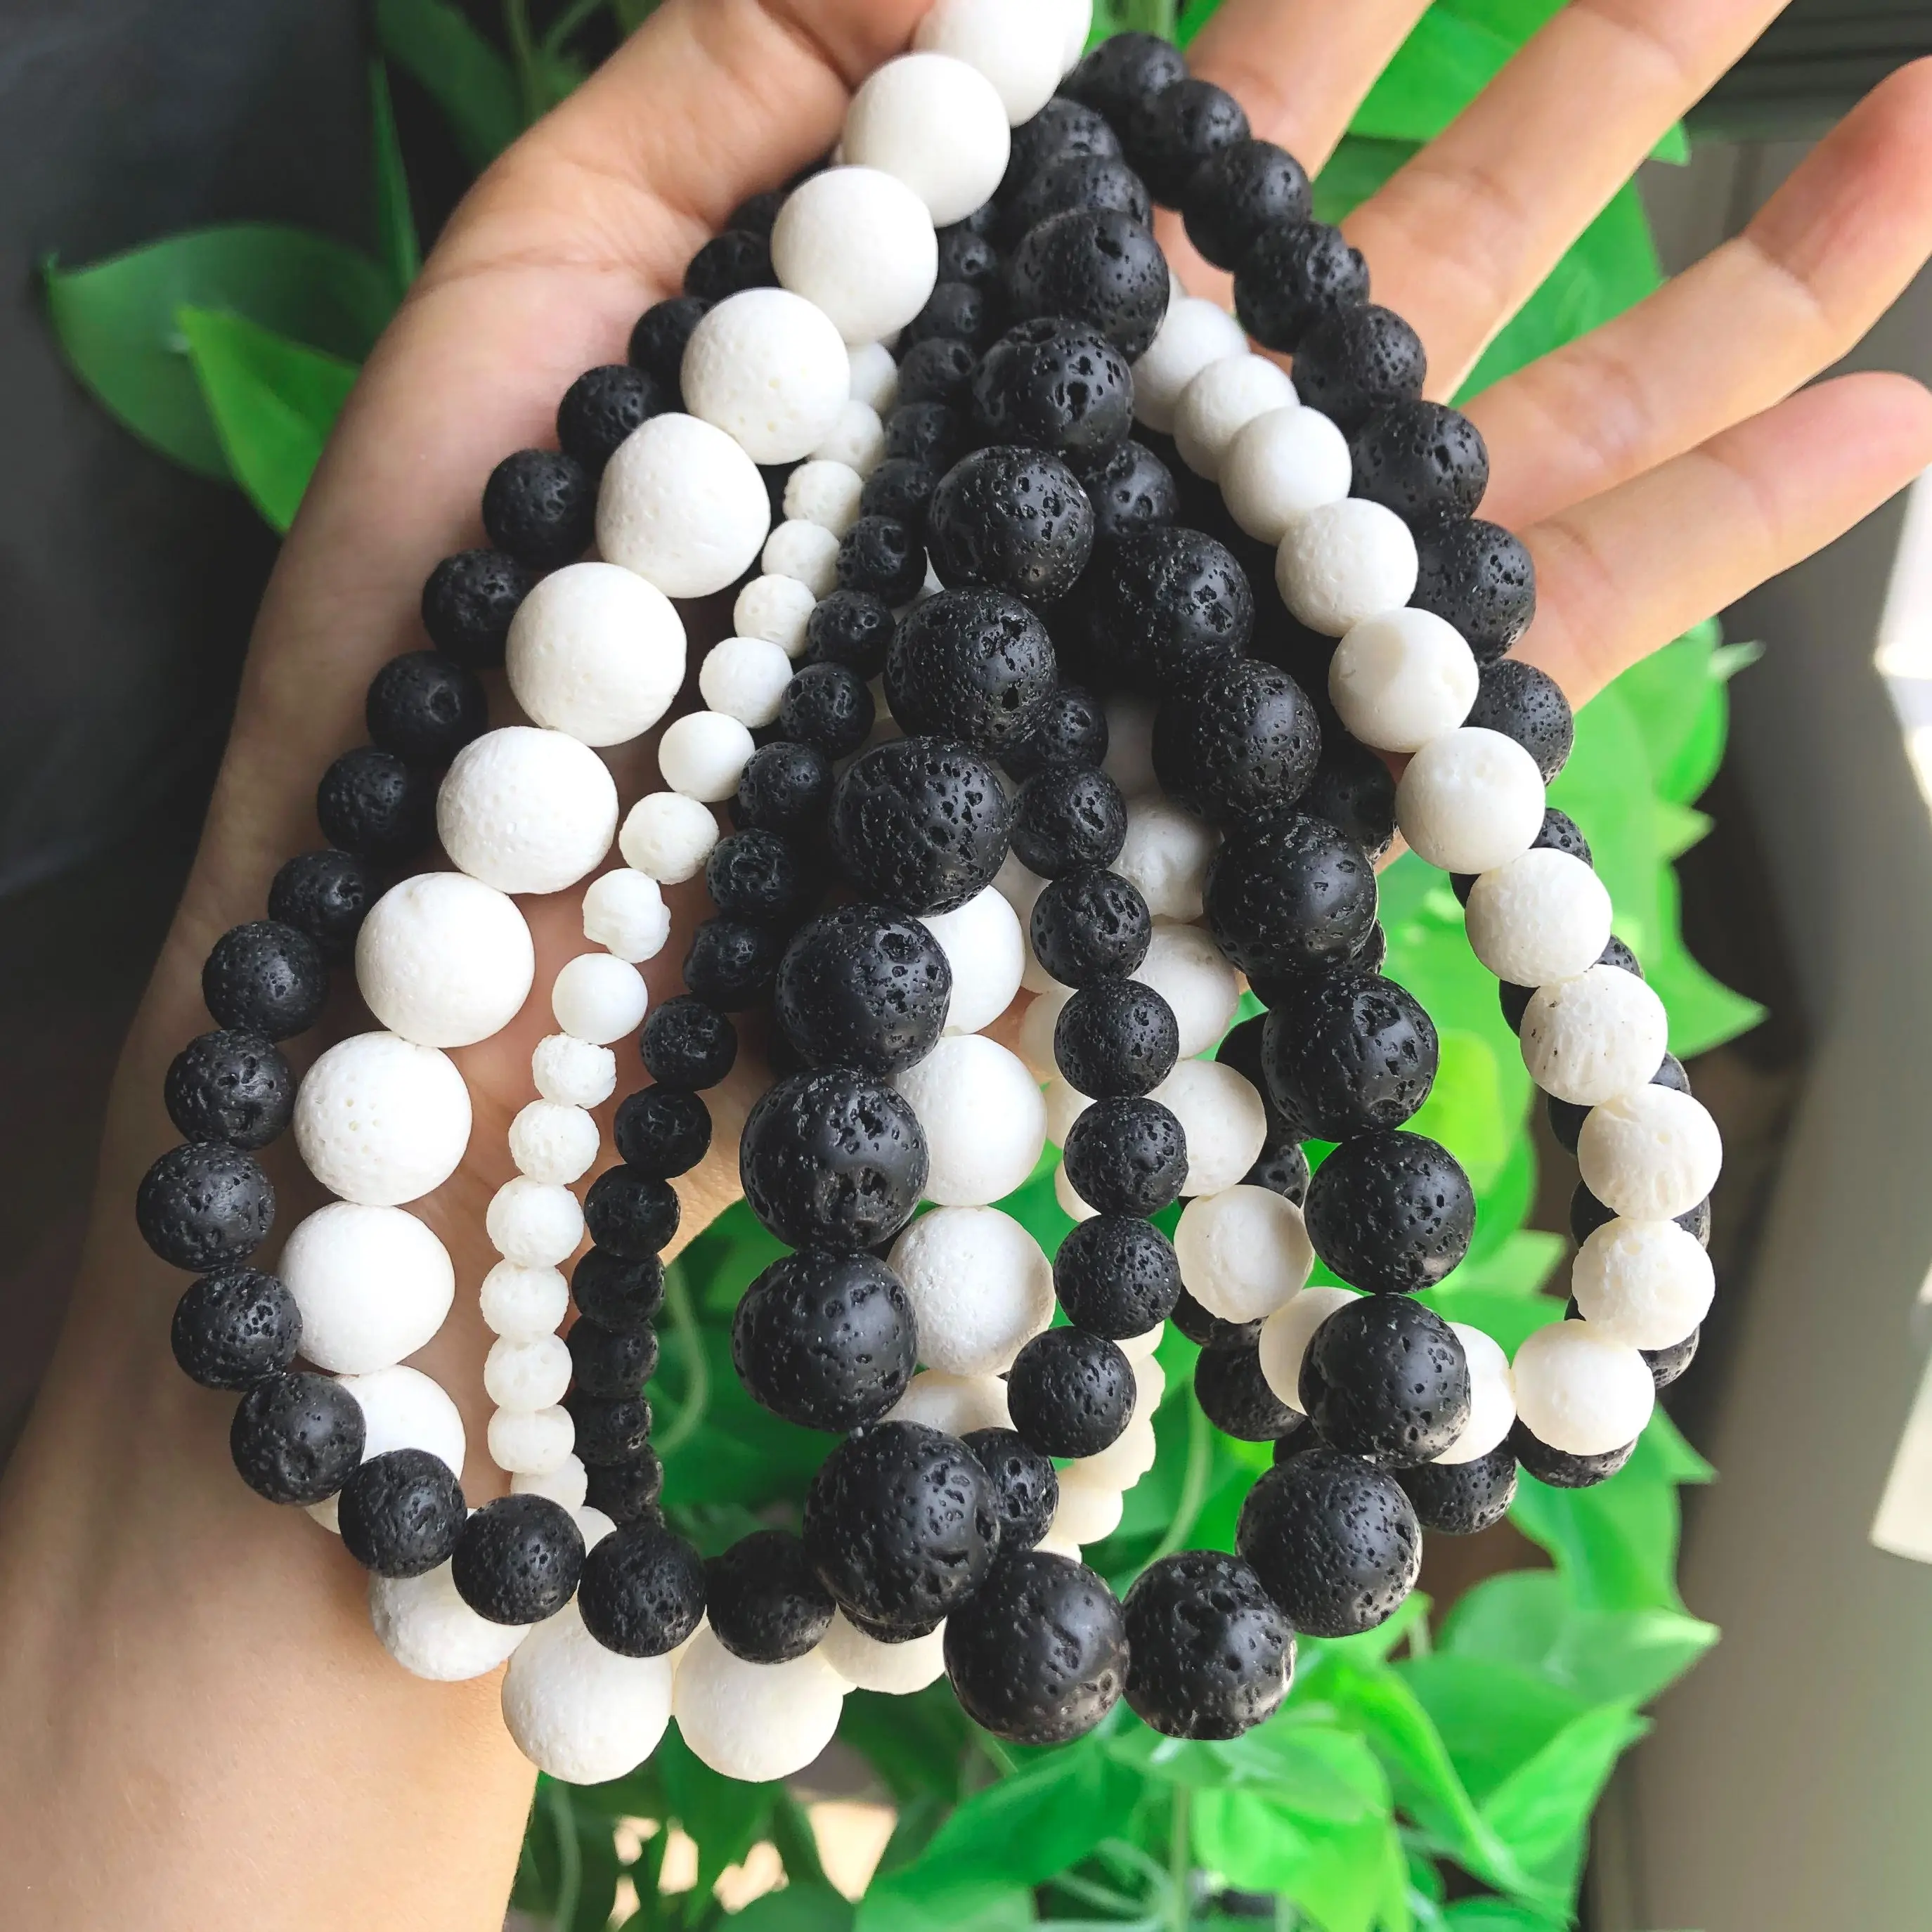 Lava Stone With Matte Agate Beads Bracelet Set Wholesale Price 